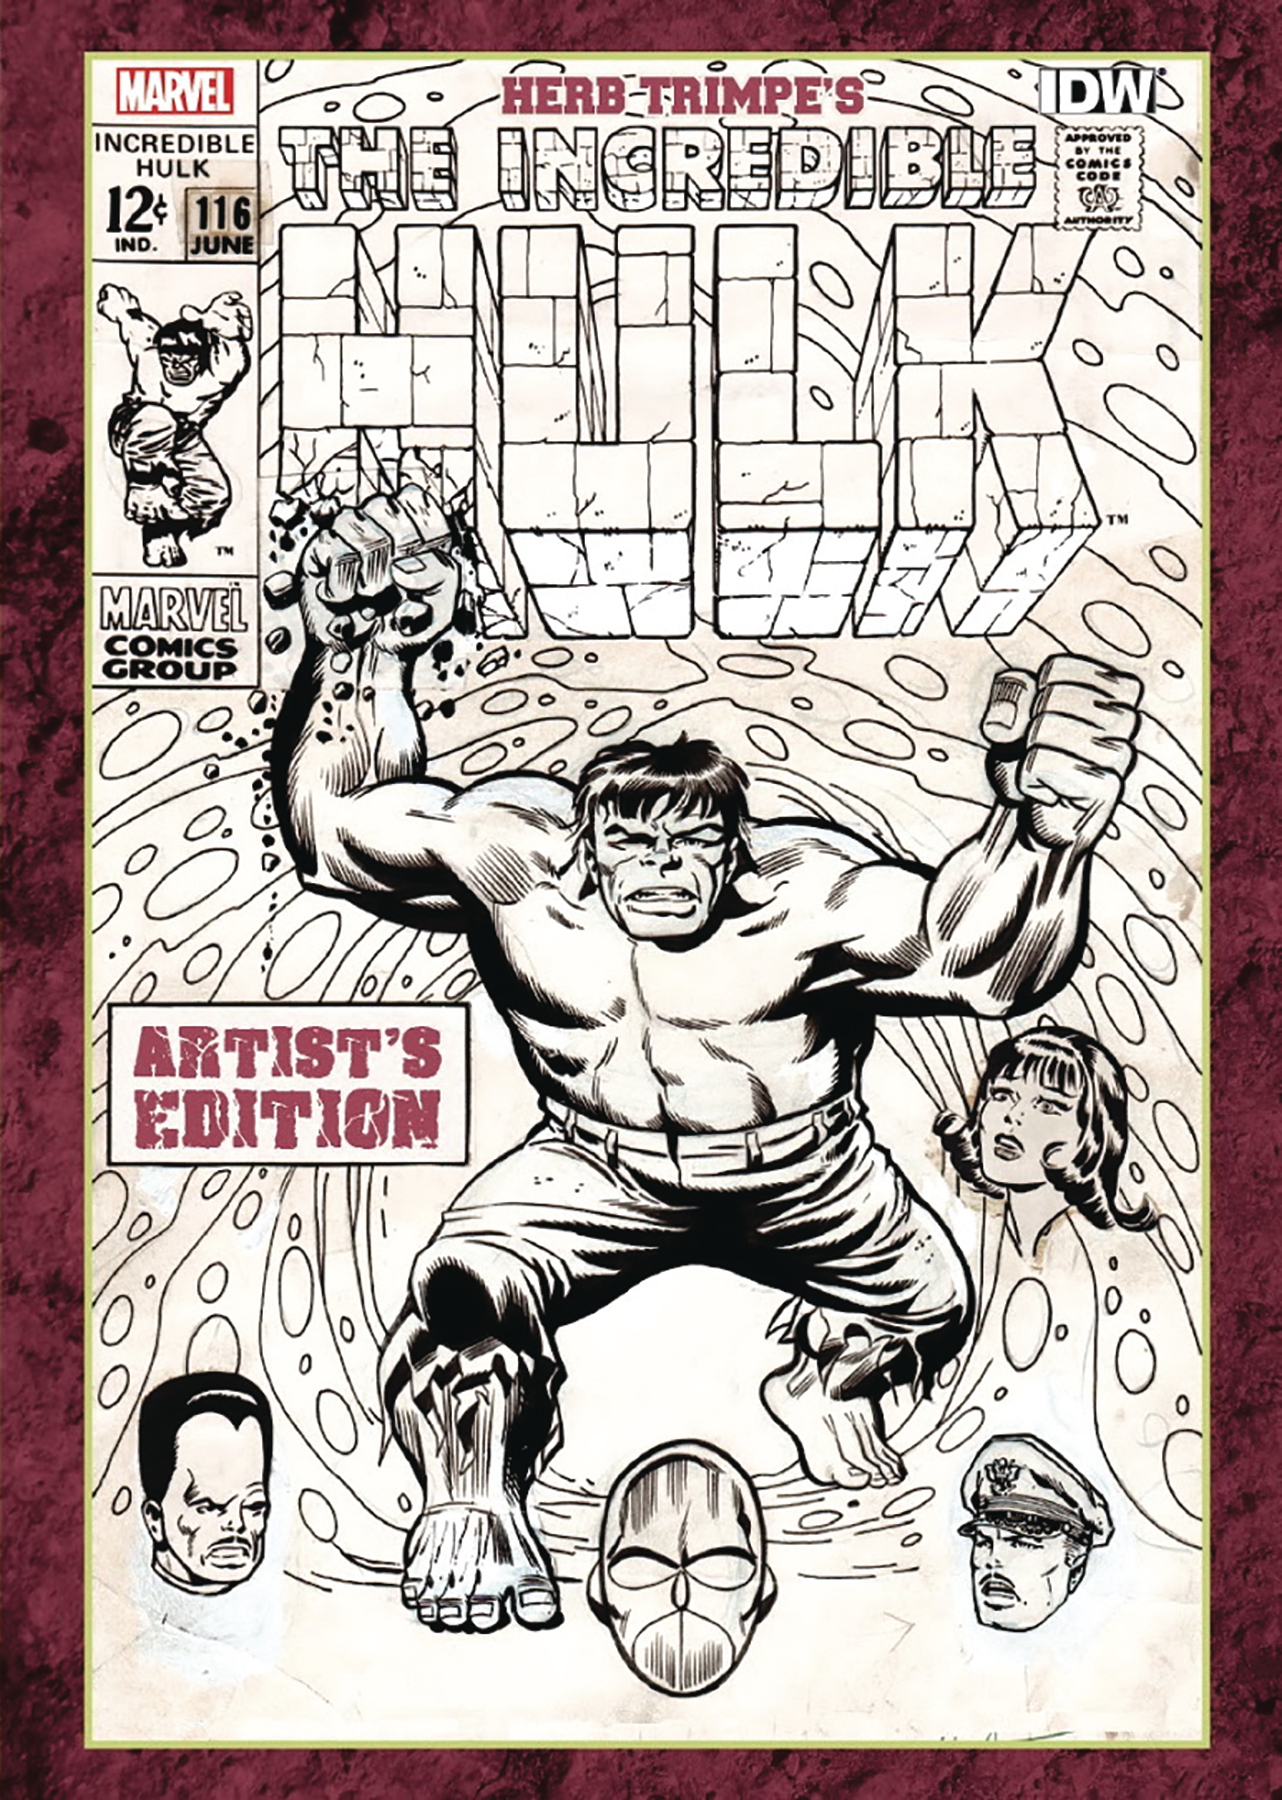 Herb Trimpe Incredible Hulk Artist Edition Hardcover